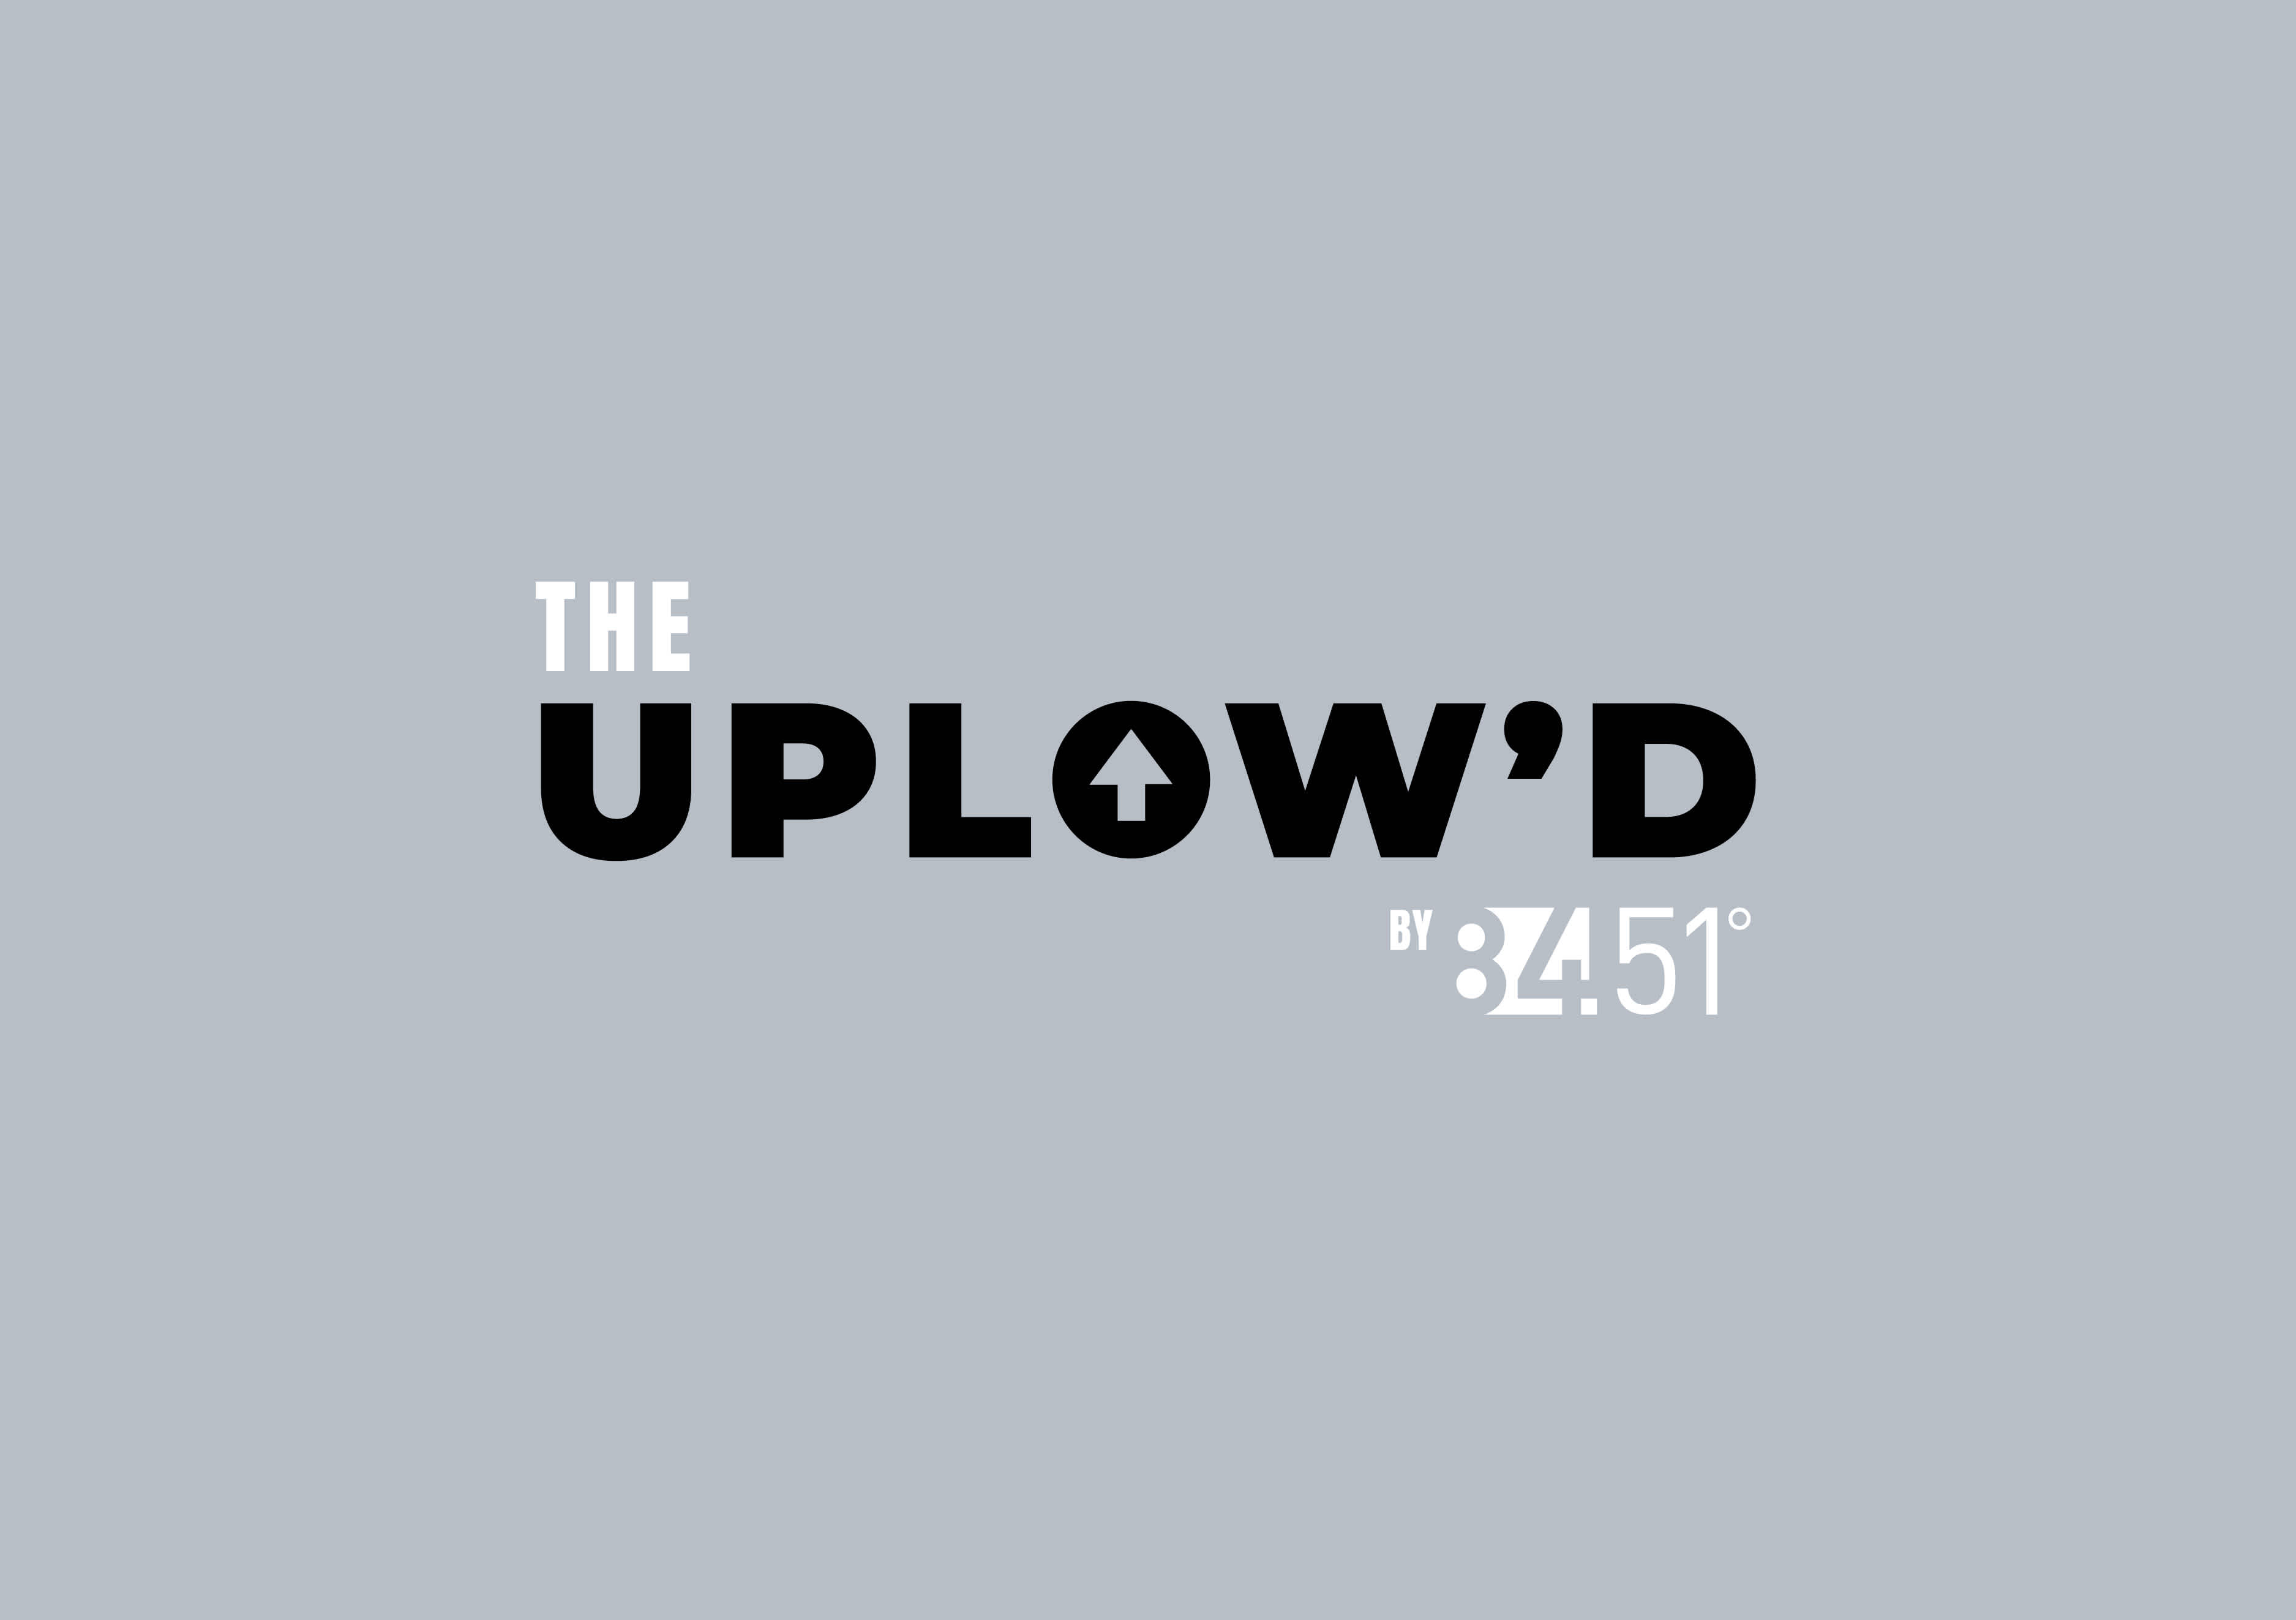 8451 Uplowd Podcast Image Assets 900 X 635 Default FPO 1